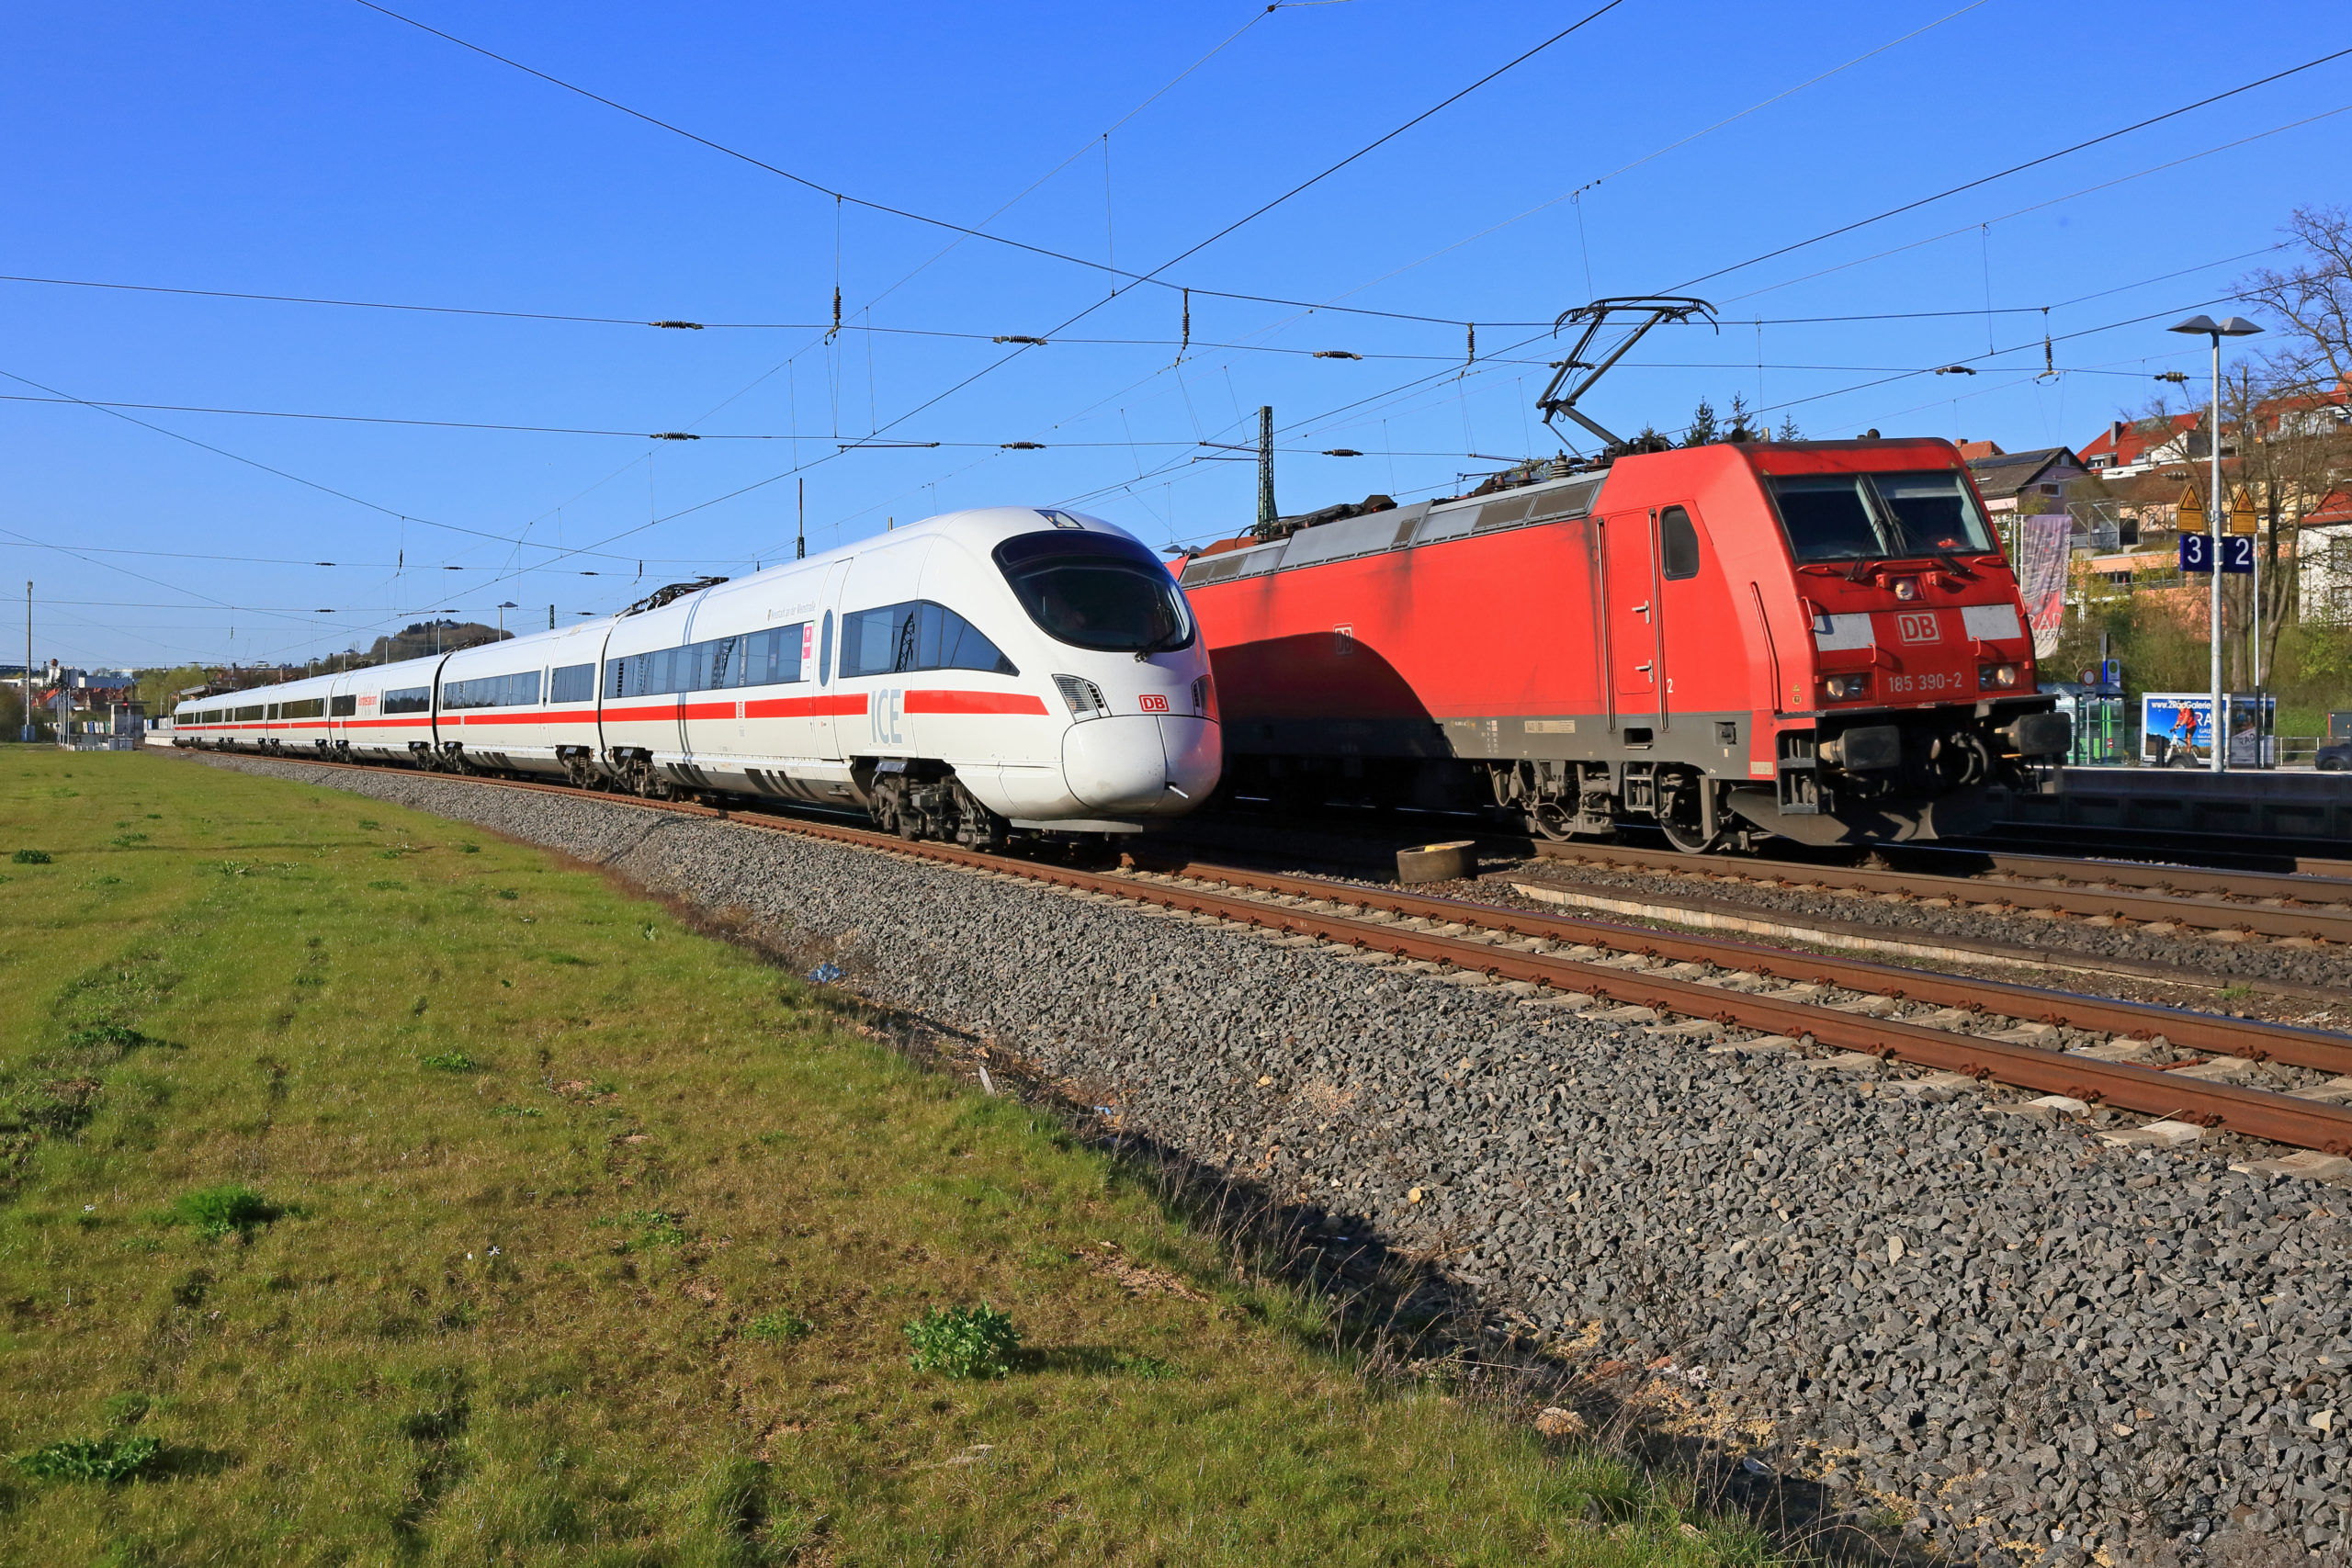 DB passenger train and freight train